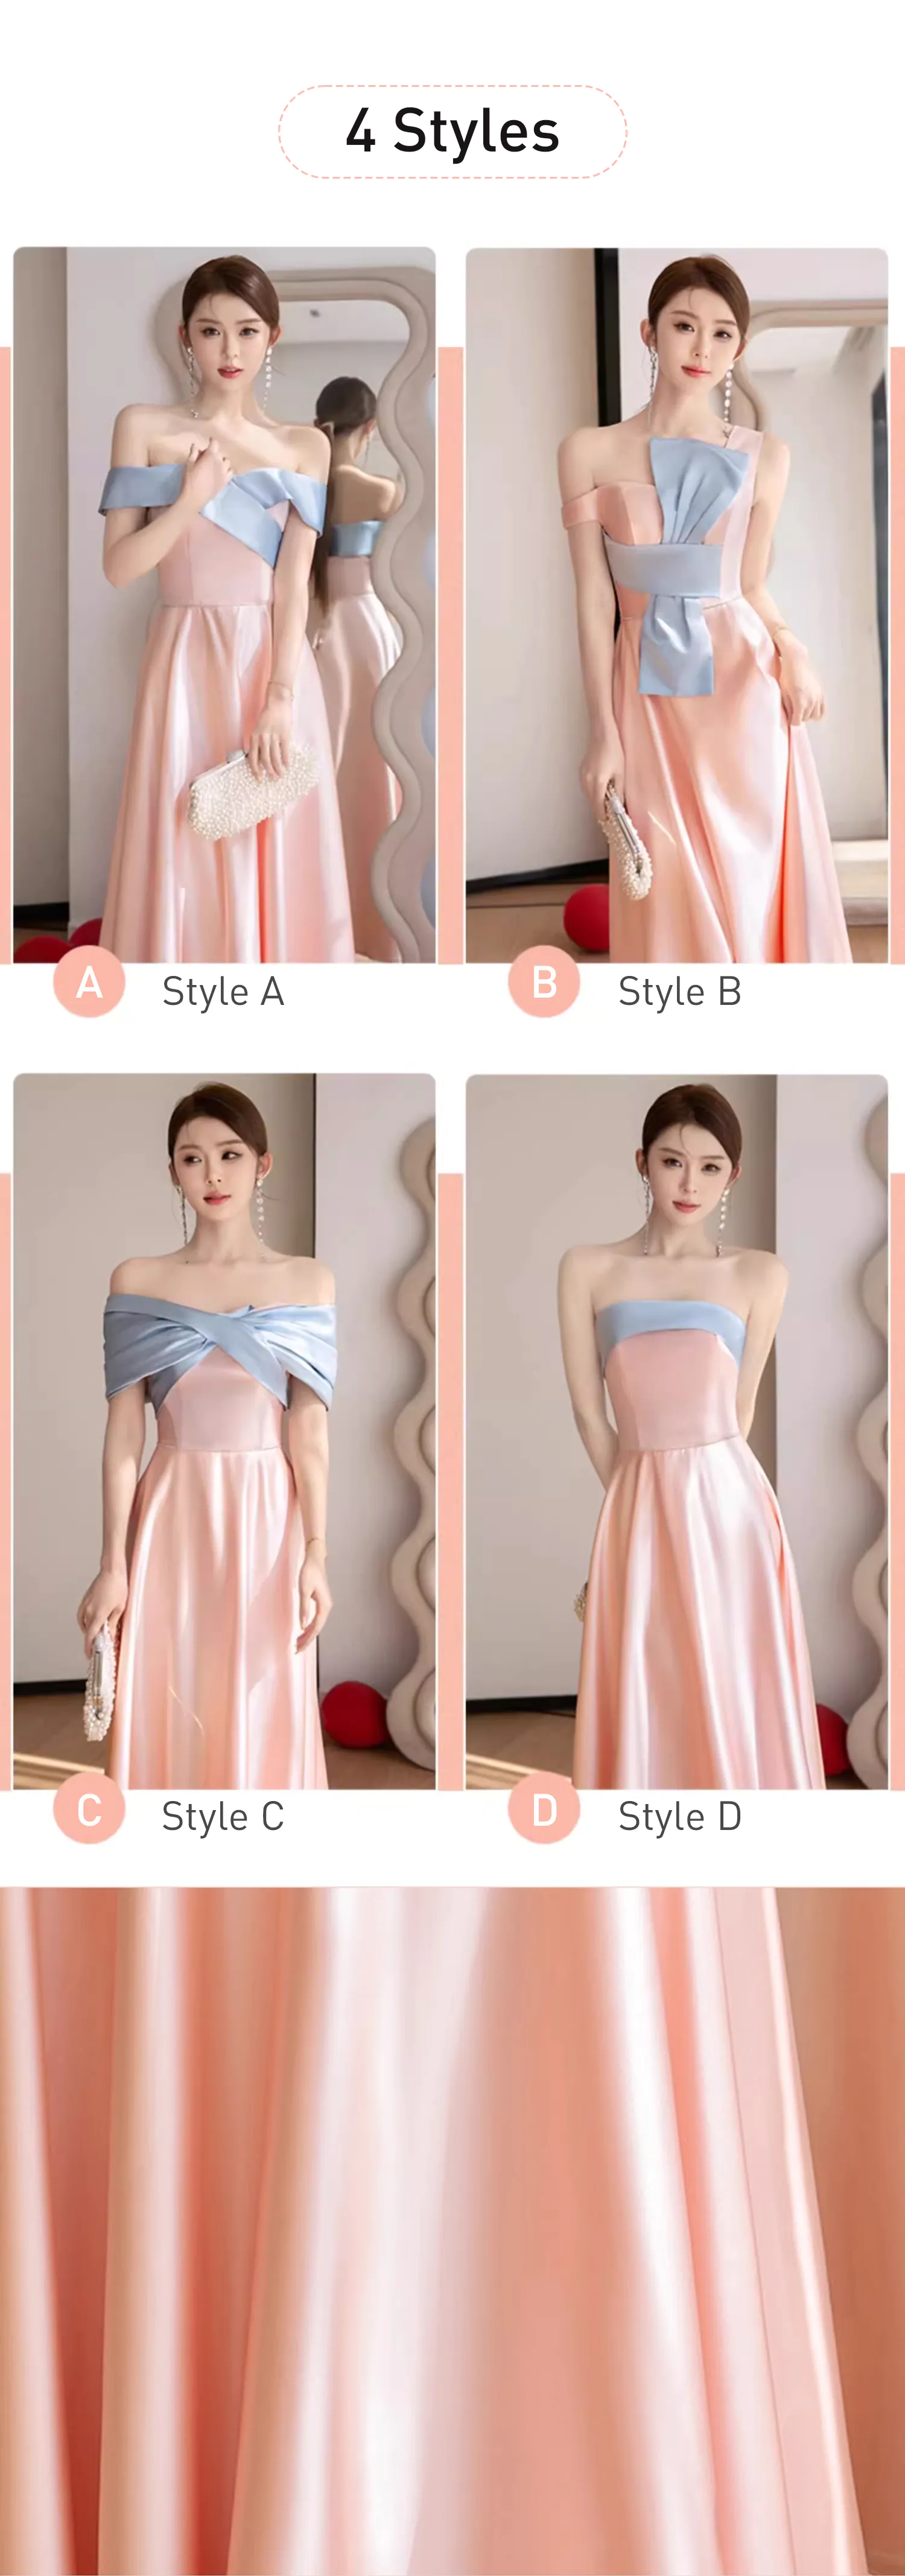 A-Line-Pink-Satin-Wedding-Bridal-Party-Homecoming-Evening-Maxi-Dress13